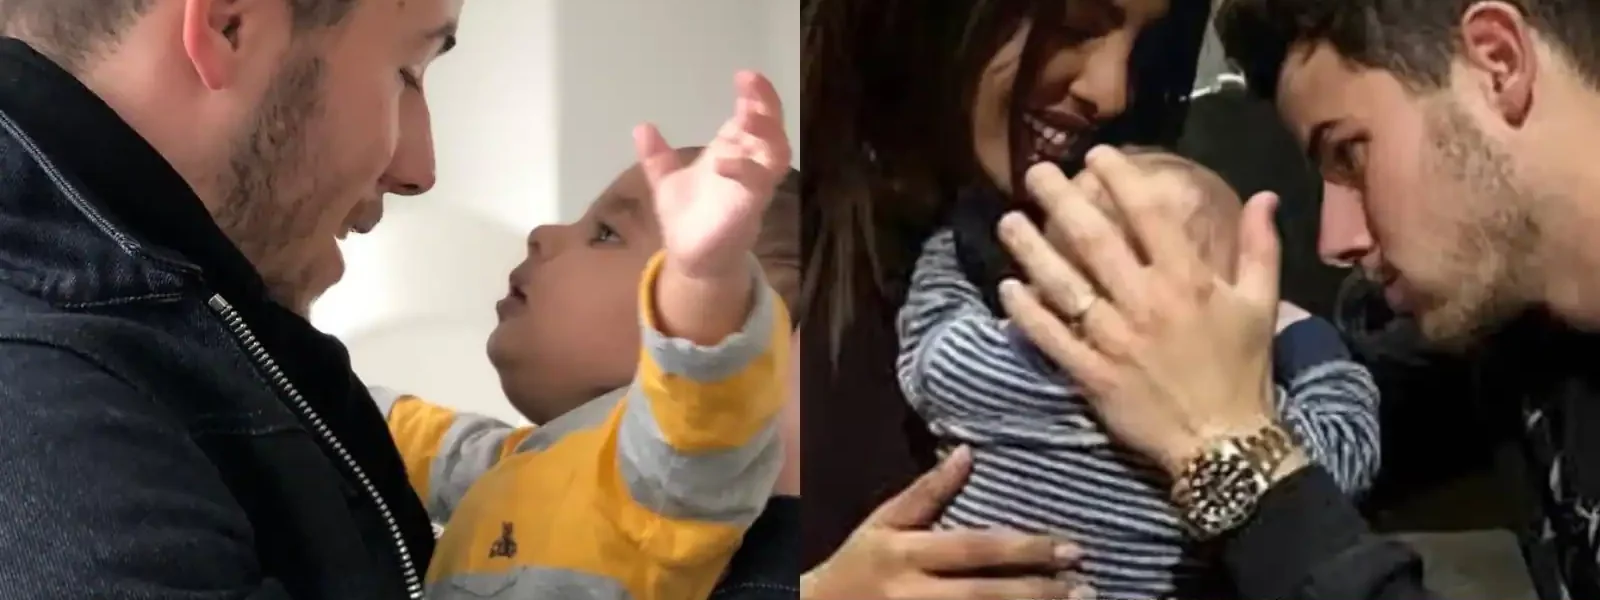 Nick Jonas and Priyanka Chopra recently welcomed their first child through surrogacy.